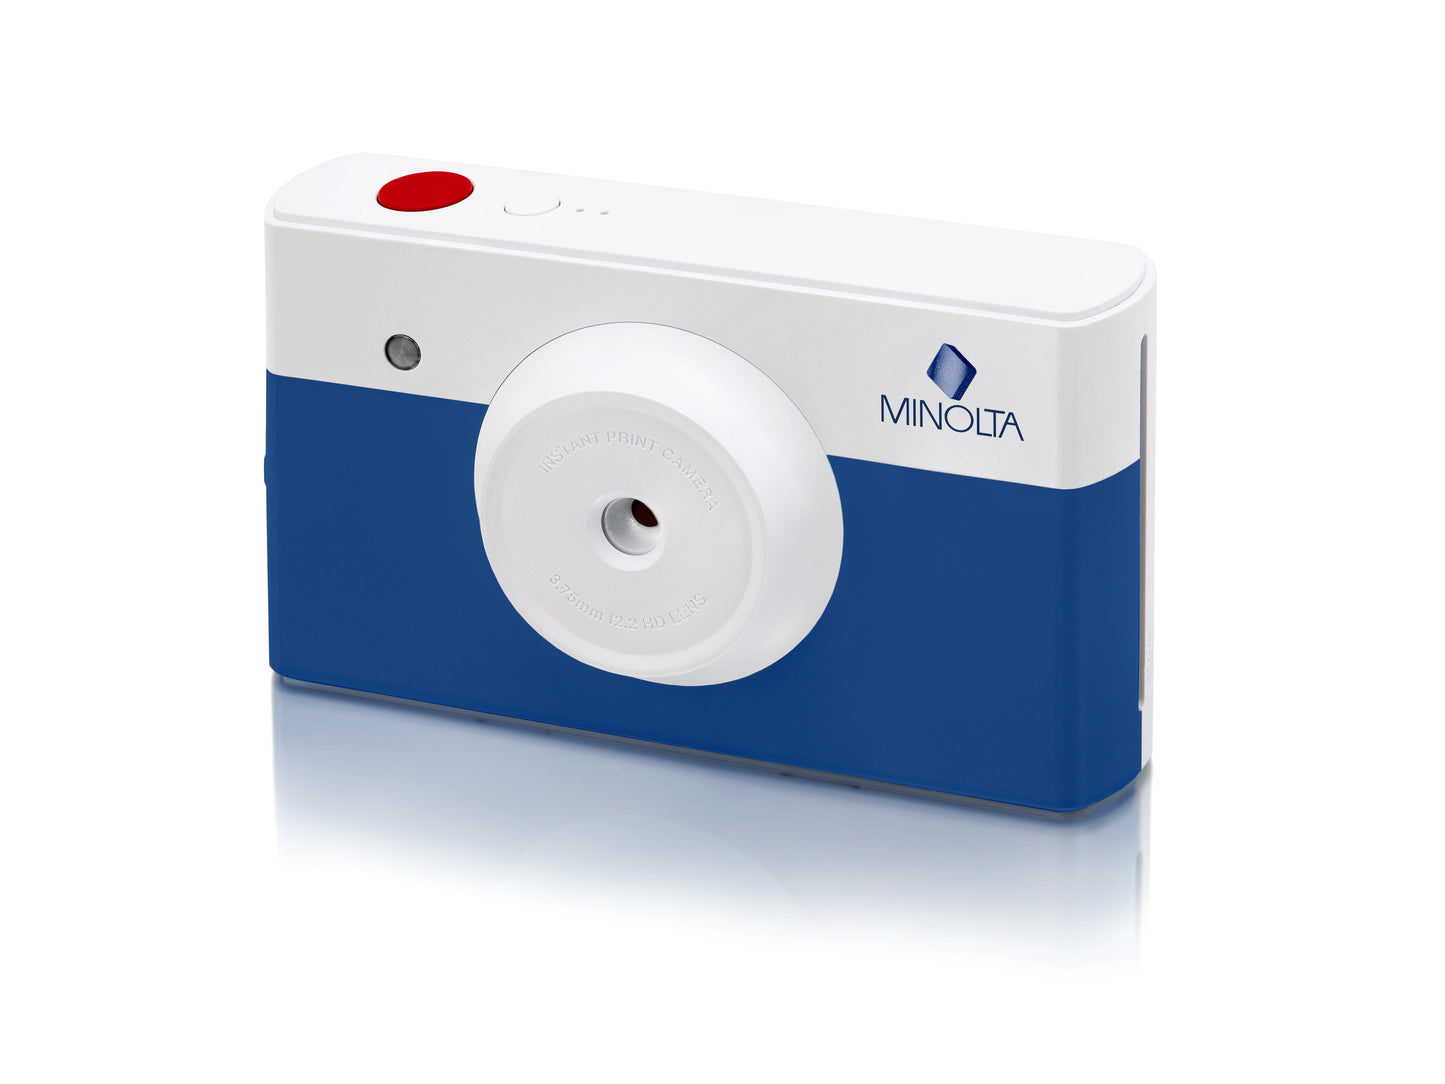 instapix™ MNCP10 Instant Print Digital Camera